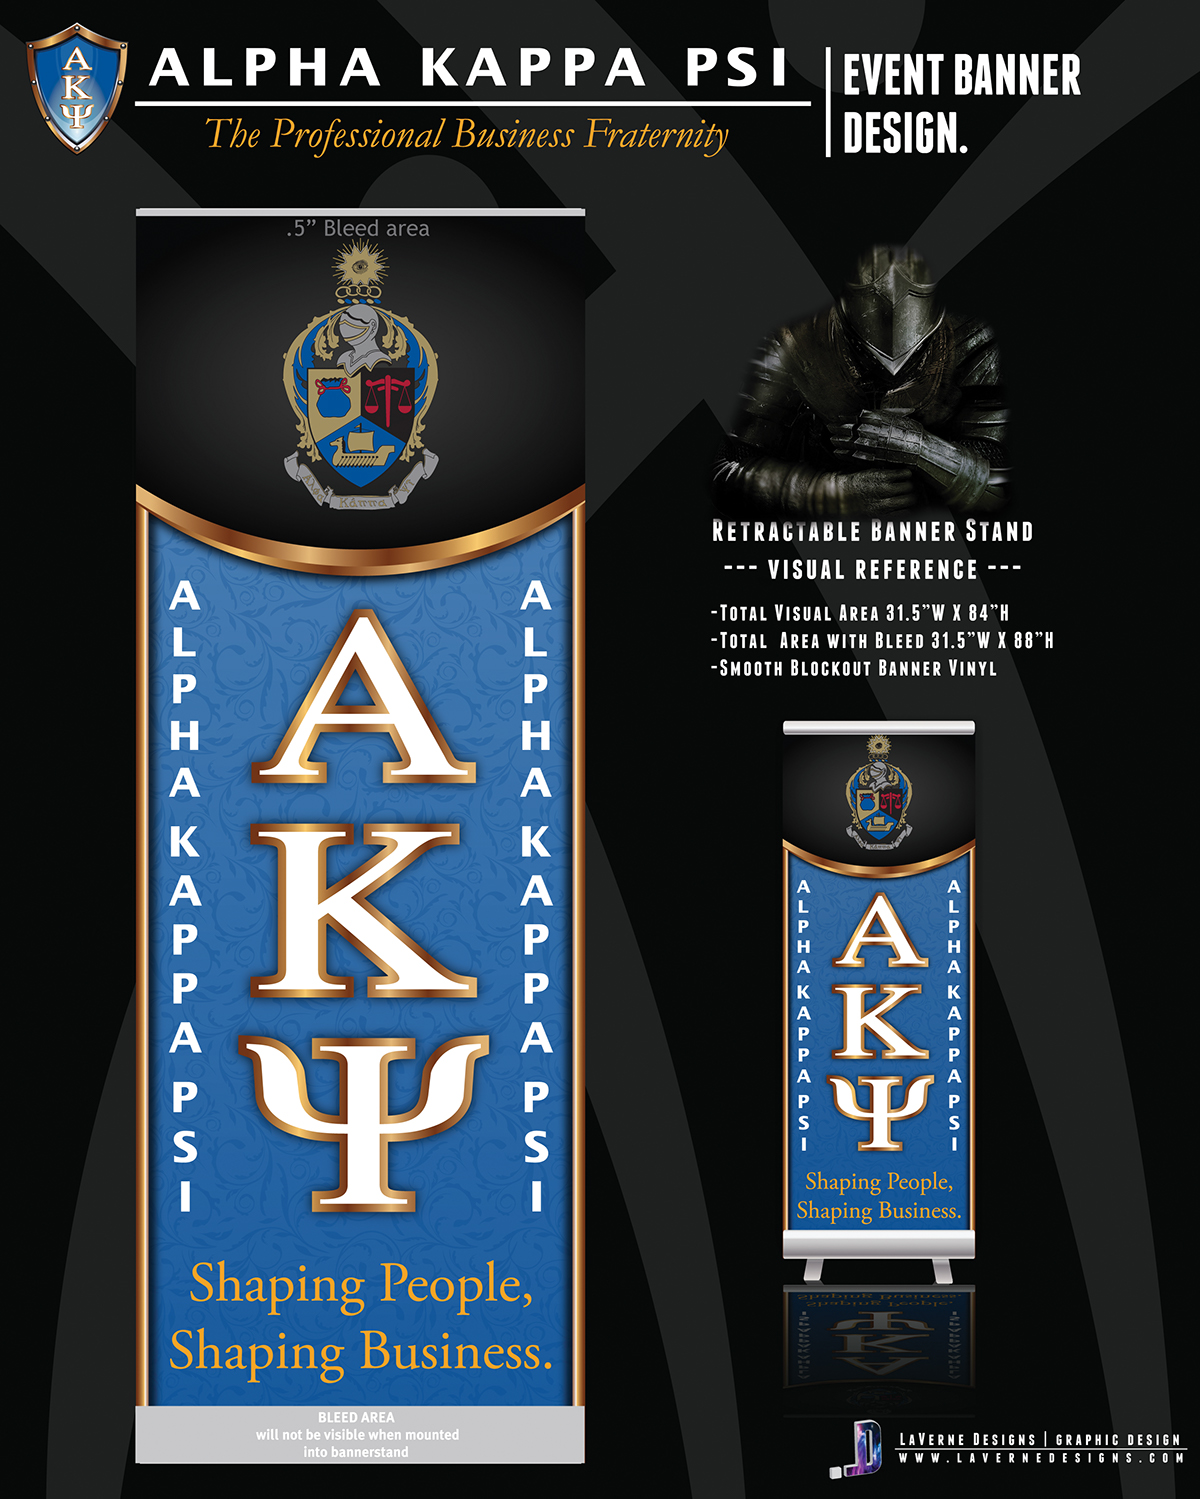 Alpha Kappa Psi business fraternity university of washington Fraternity banner designs Logo Design medieval design Medieval Knights Sign design advertising design Seattle Washington